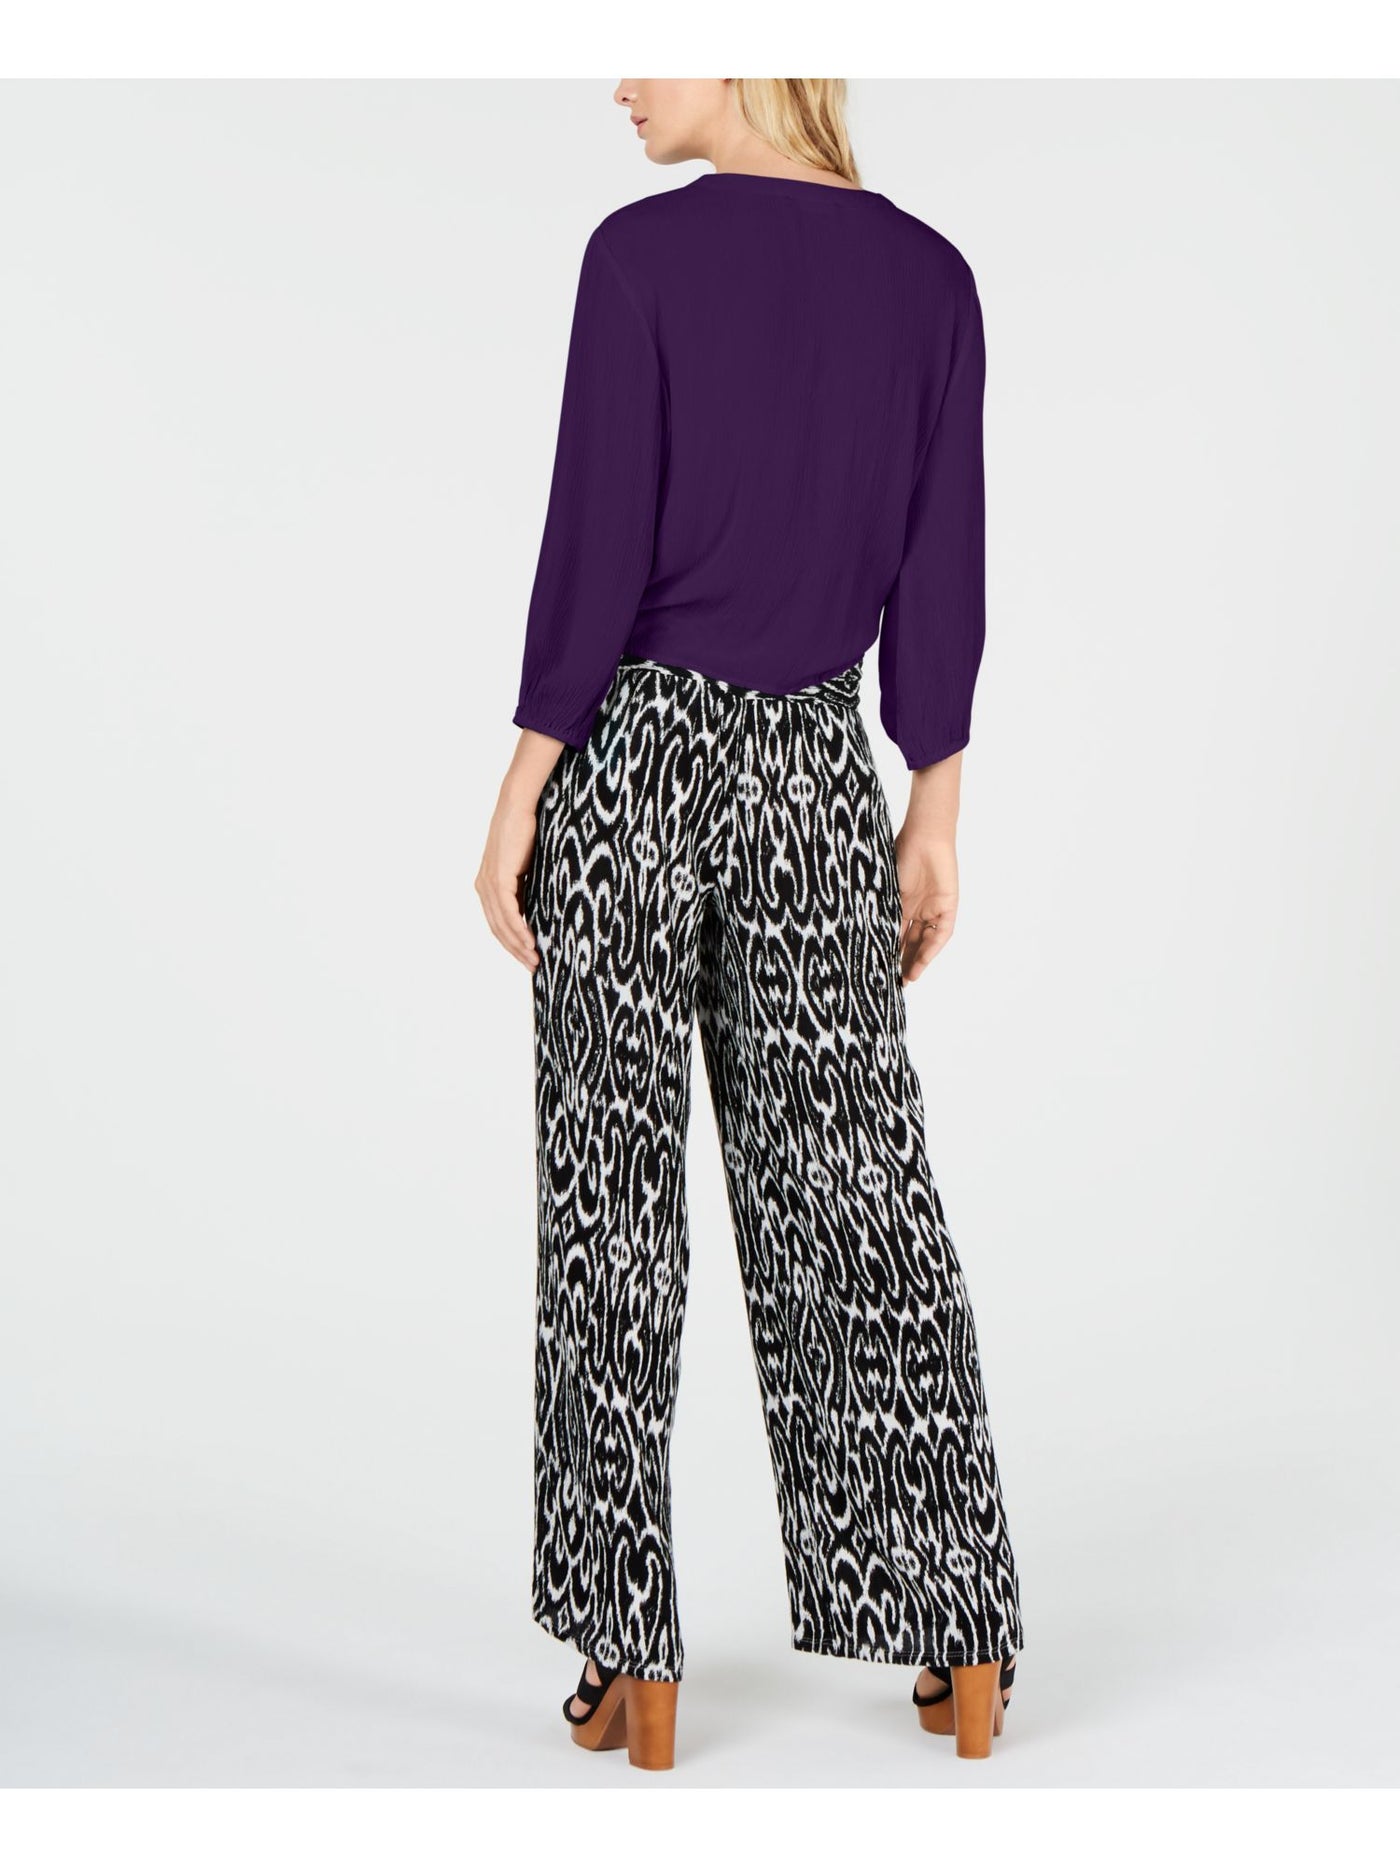 INC Womens Purple Long Sleeve V Neck Crop Top Size: S